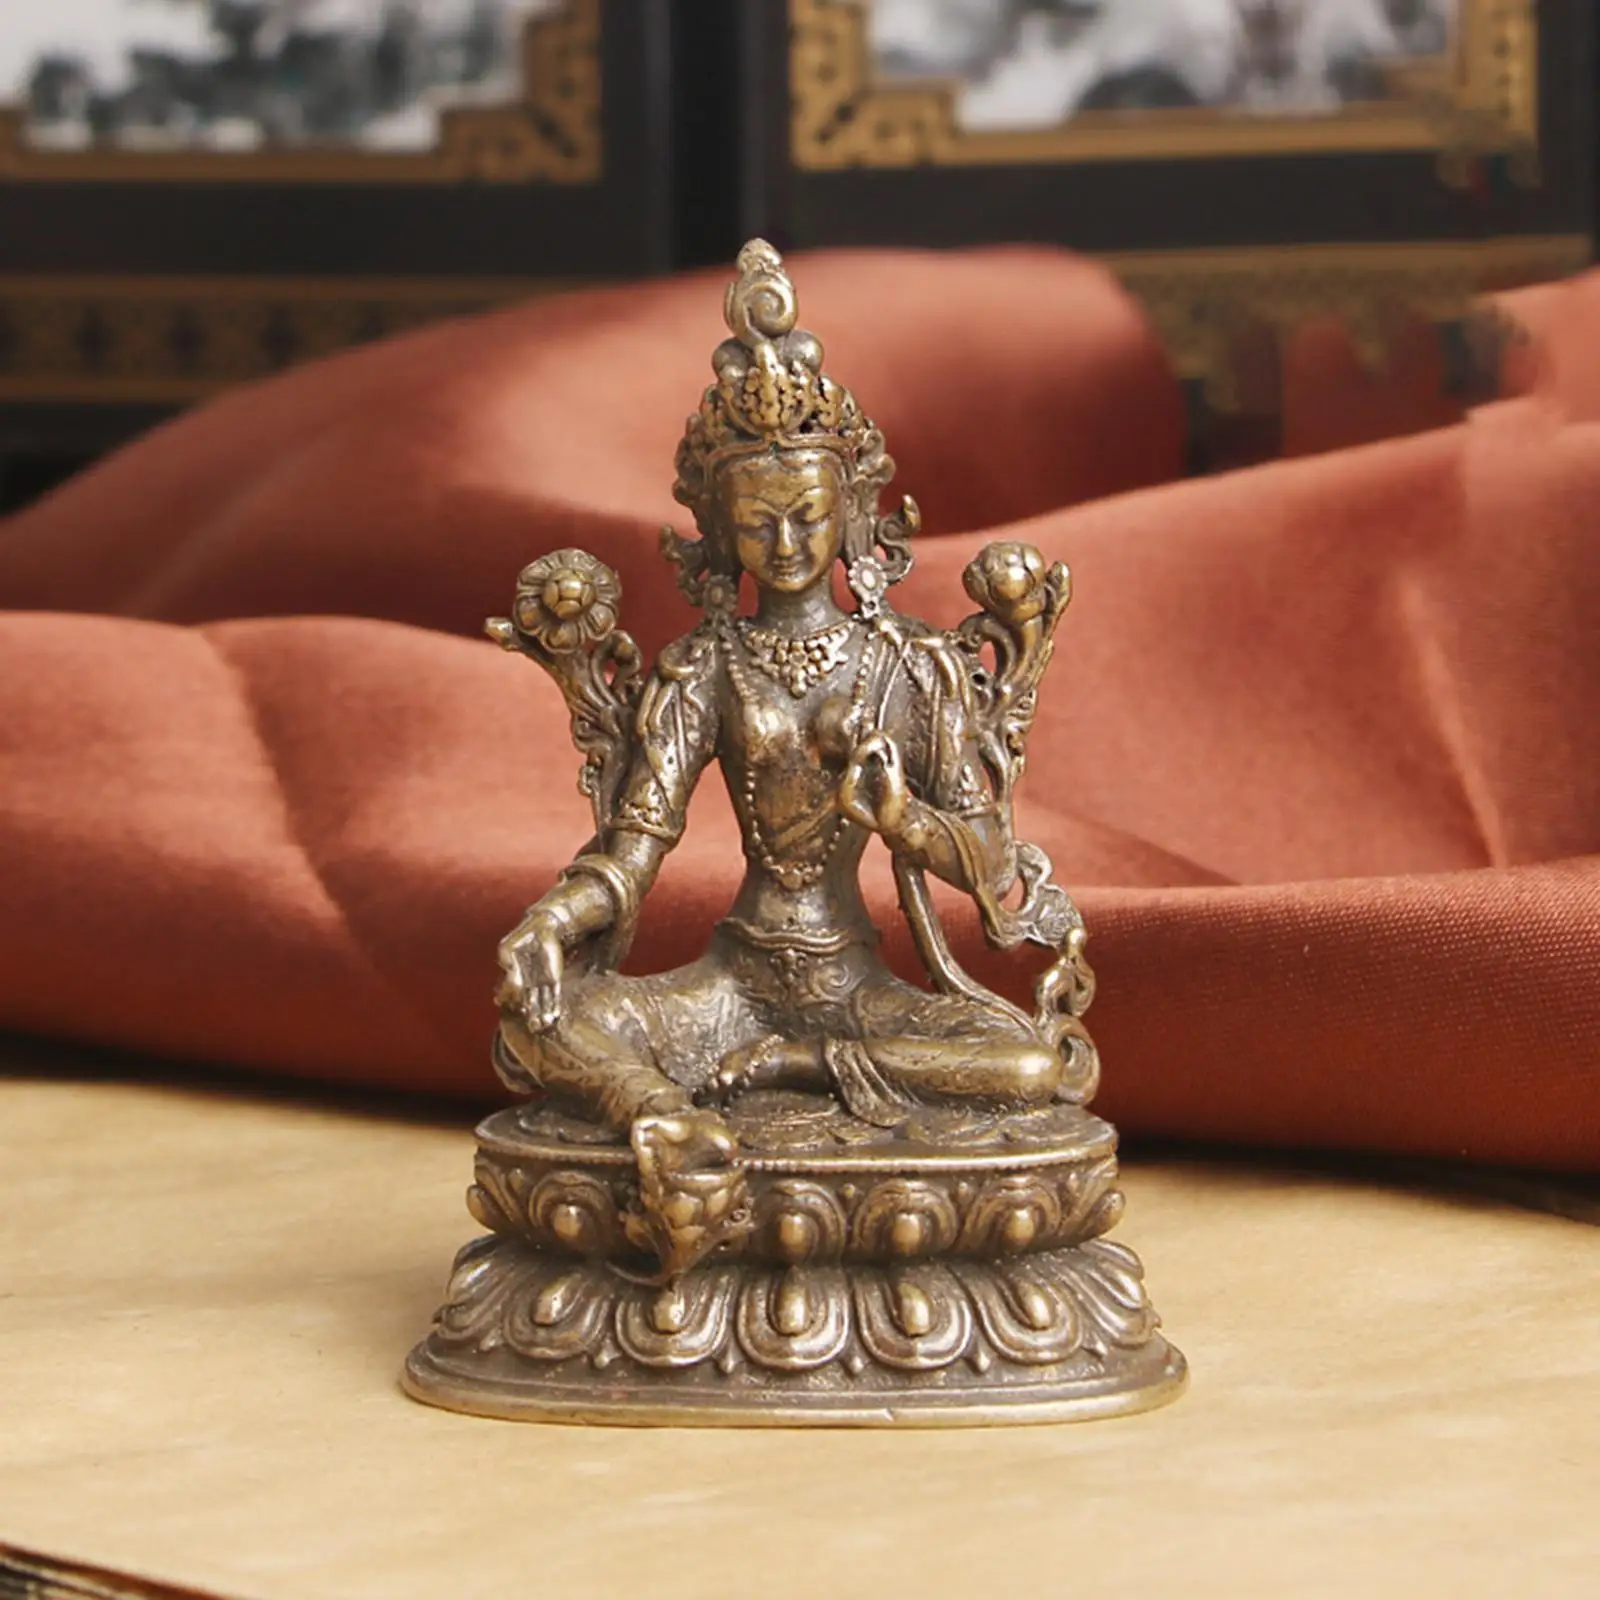 Antique Meditating Buddha Statue Buddhist Figurine Buddhism Sculpture Crafts for Tea House Desktop Cabinet Office Decoration